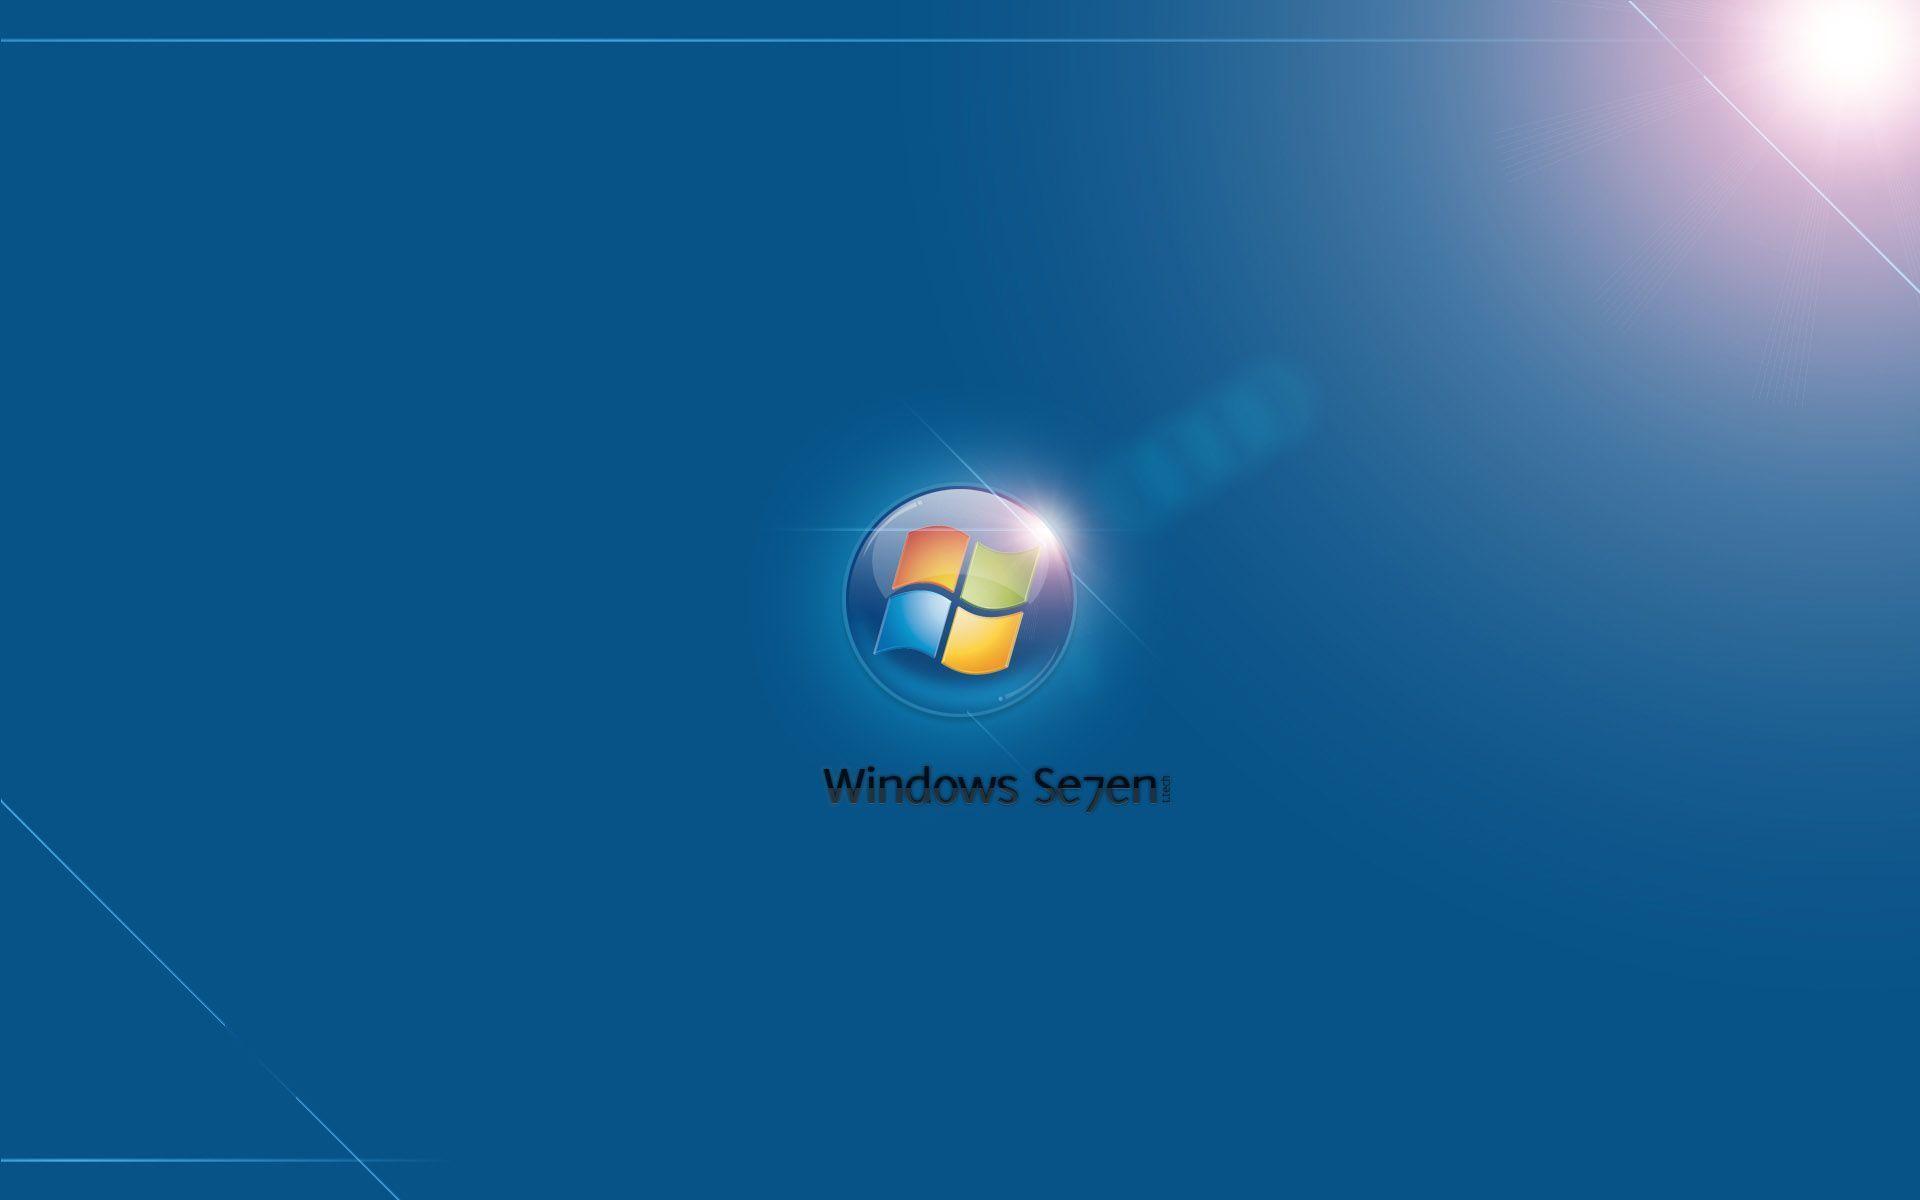 Windows 7 wallpaper, picture for Windows 7